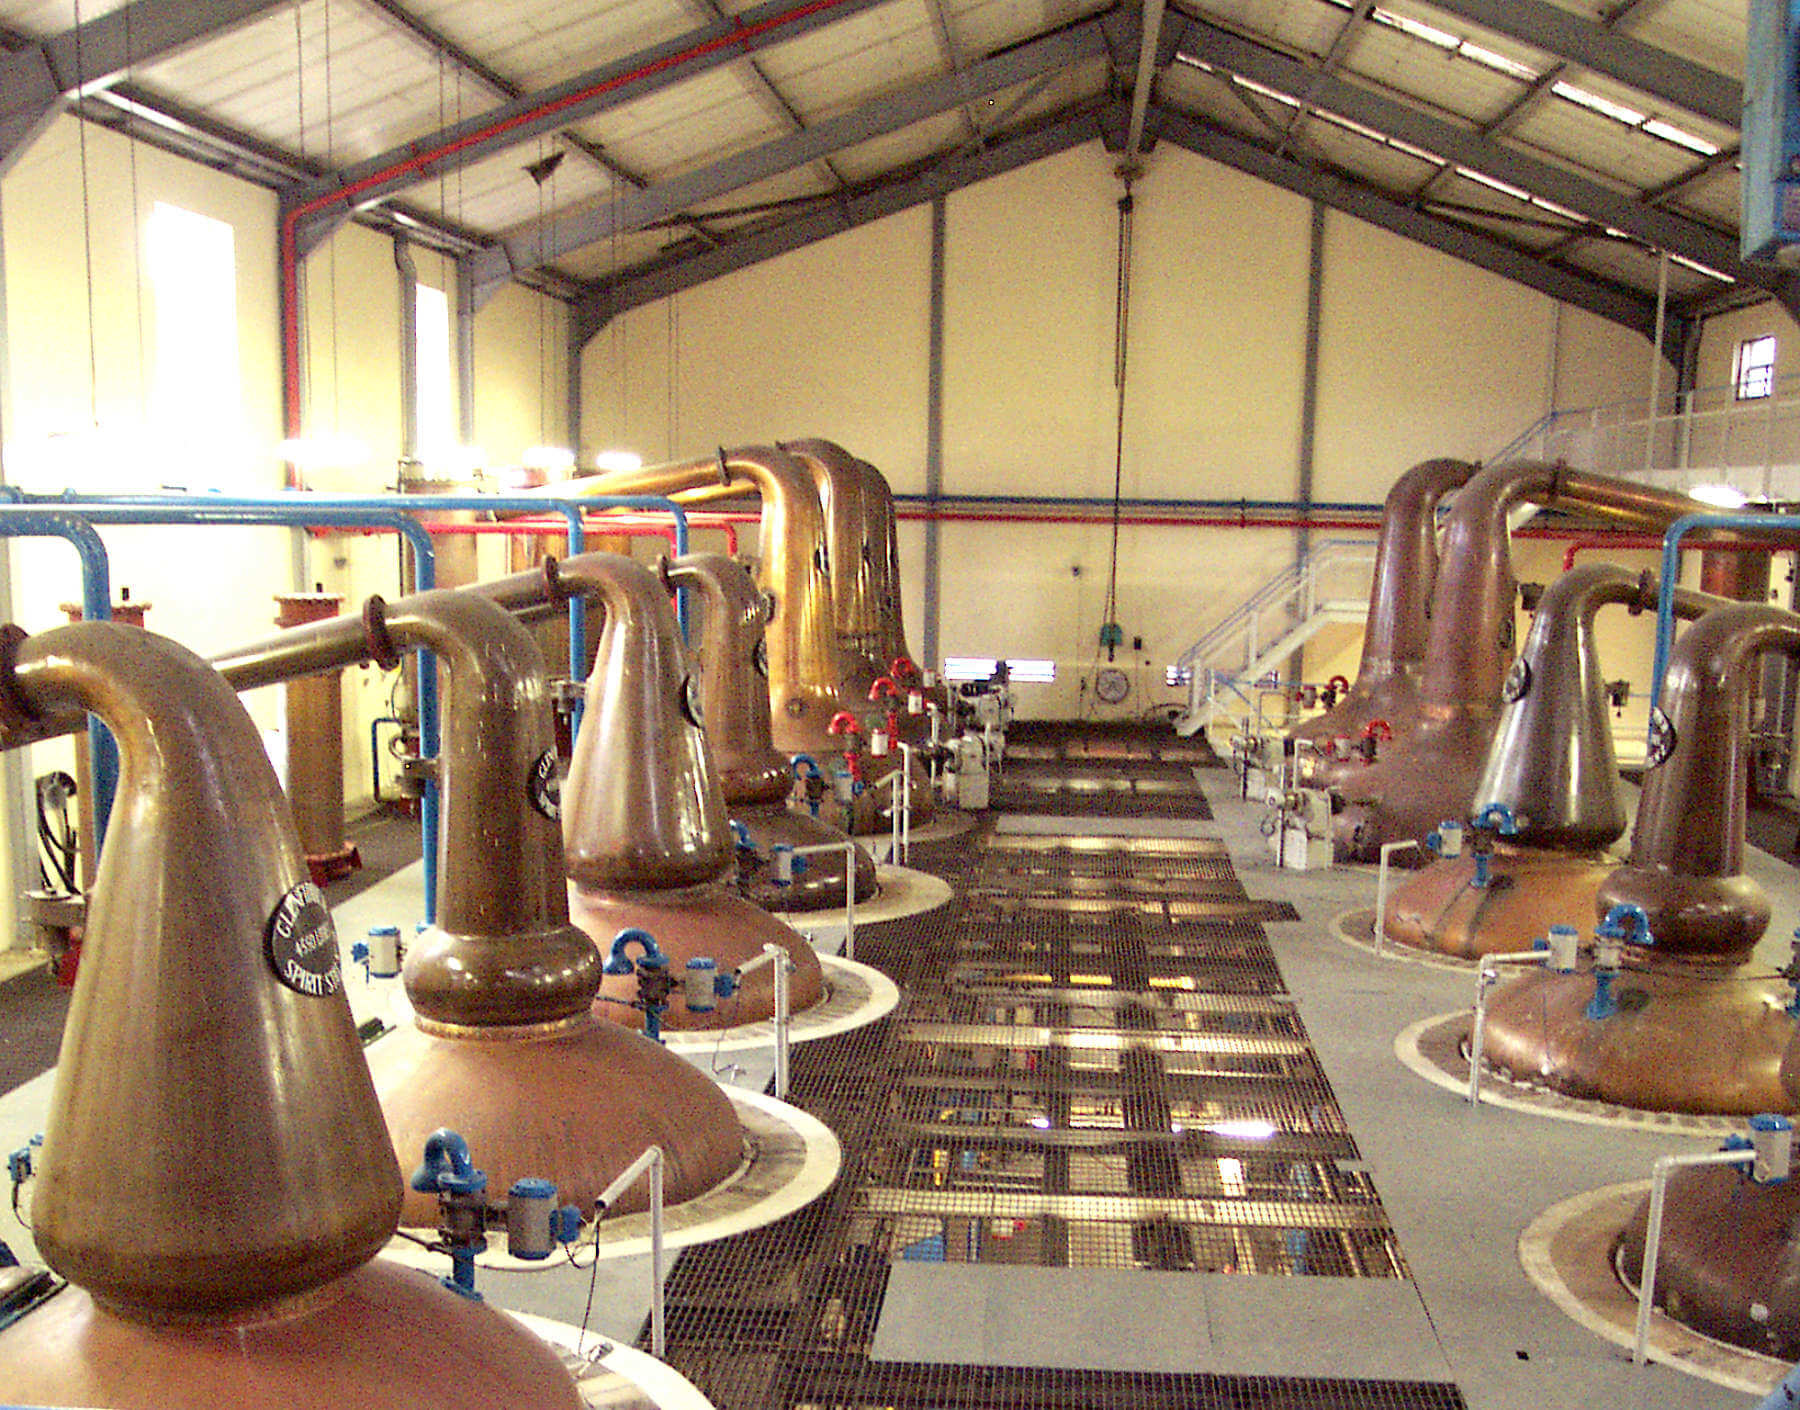 The Distillation